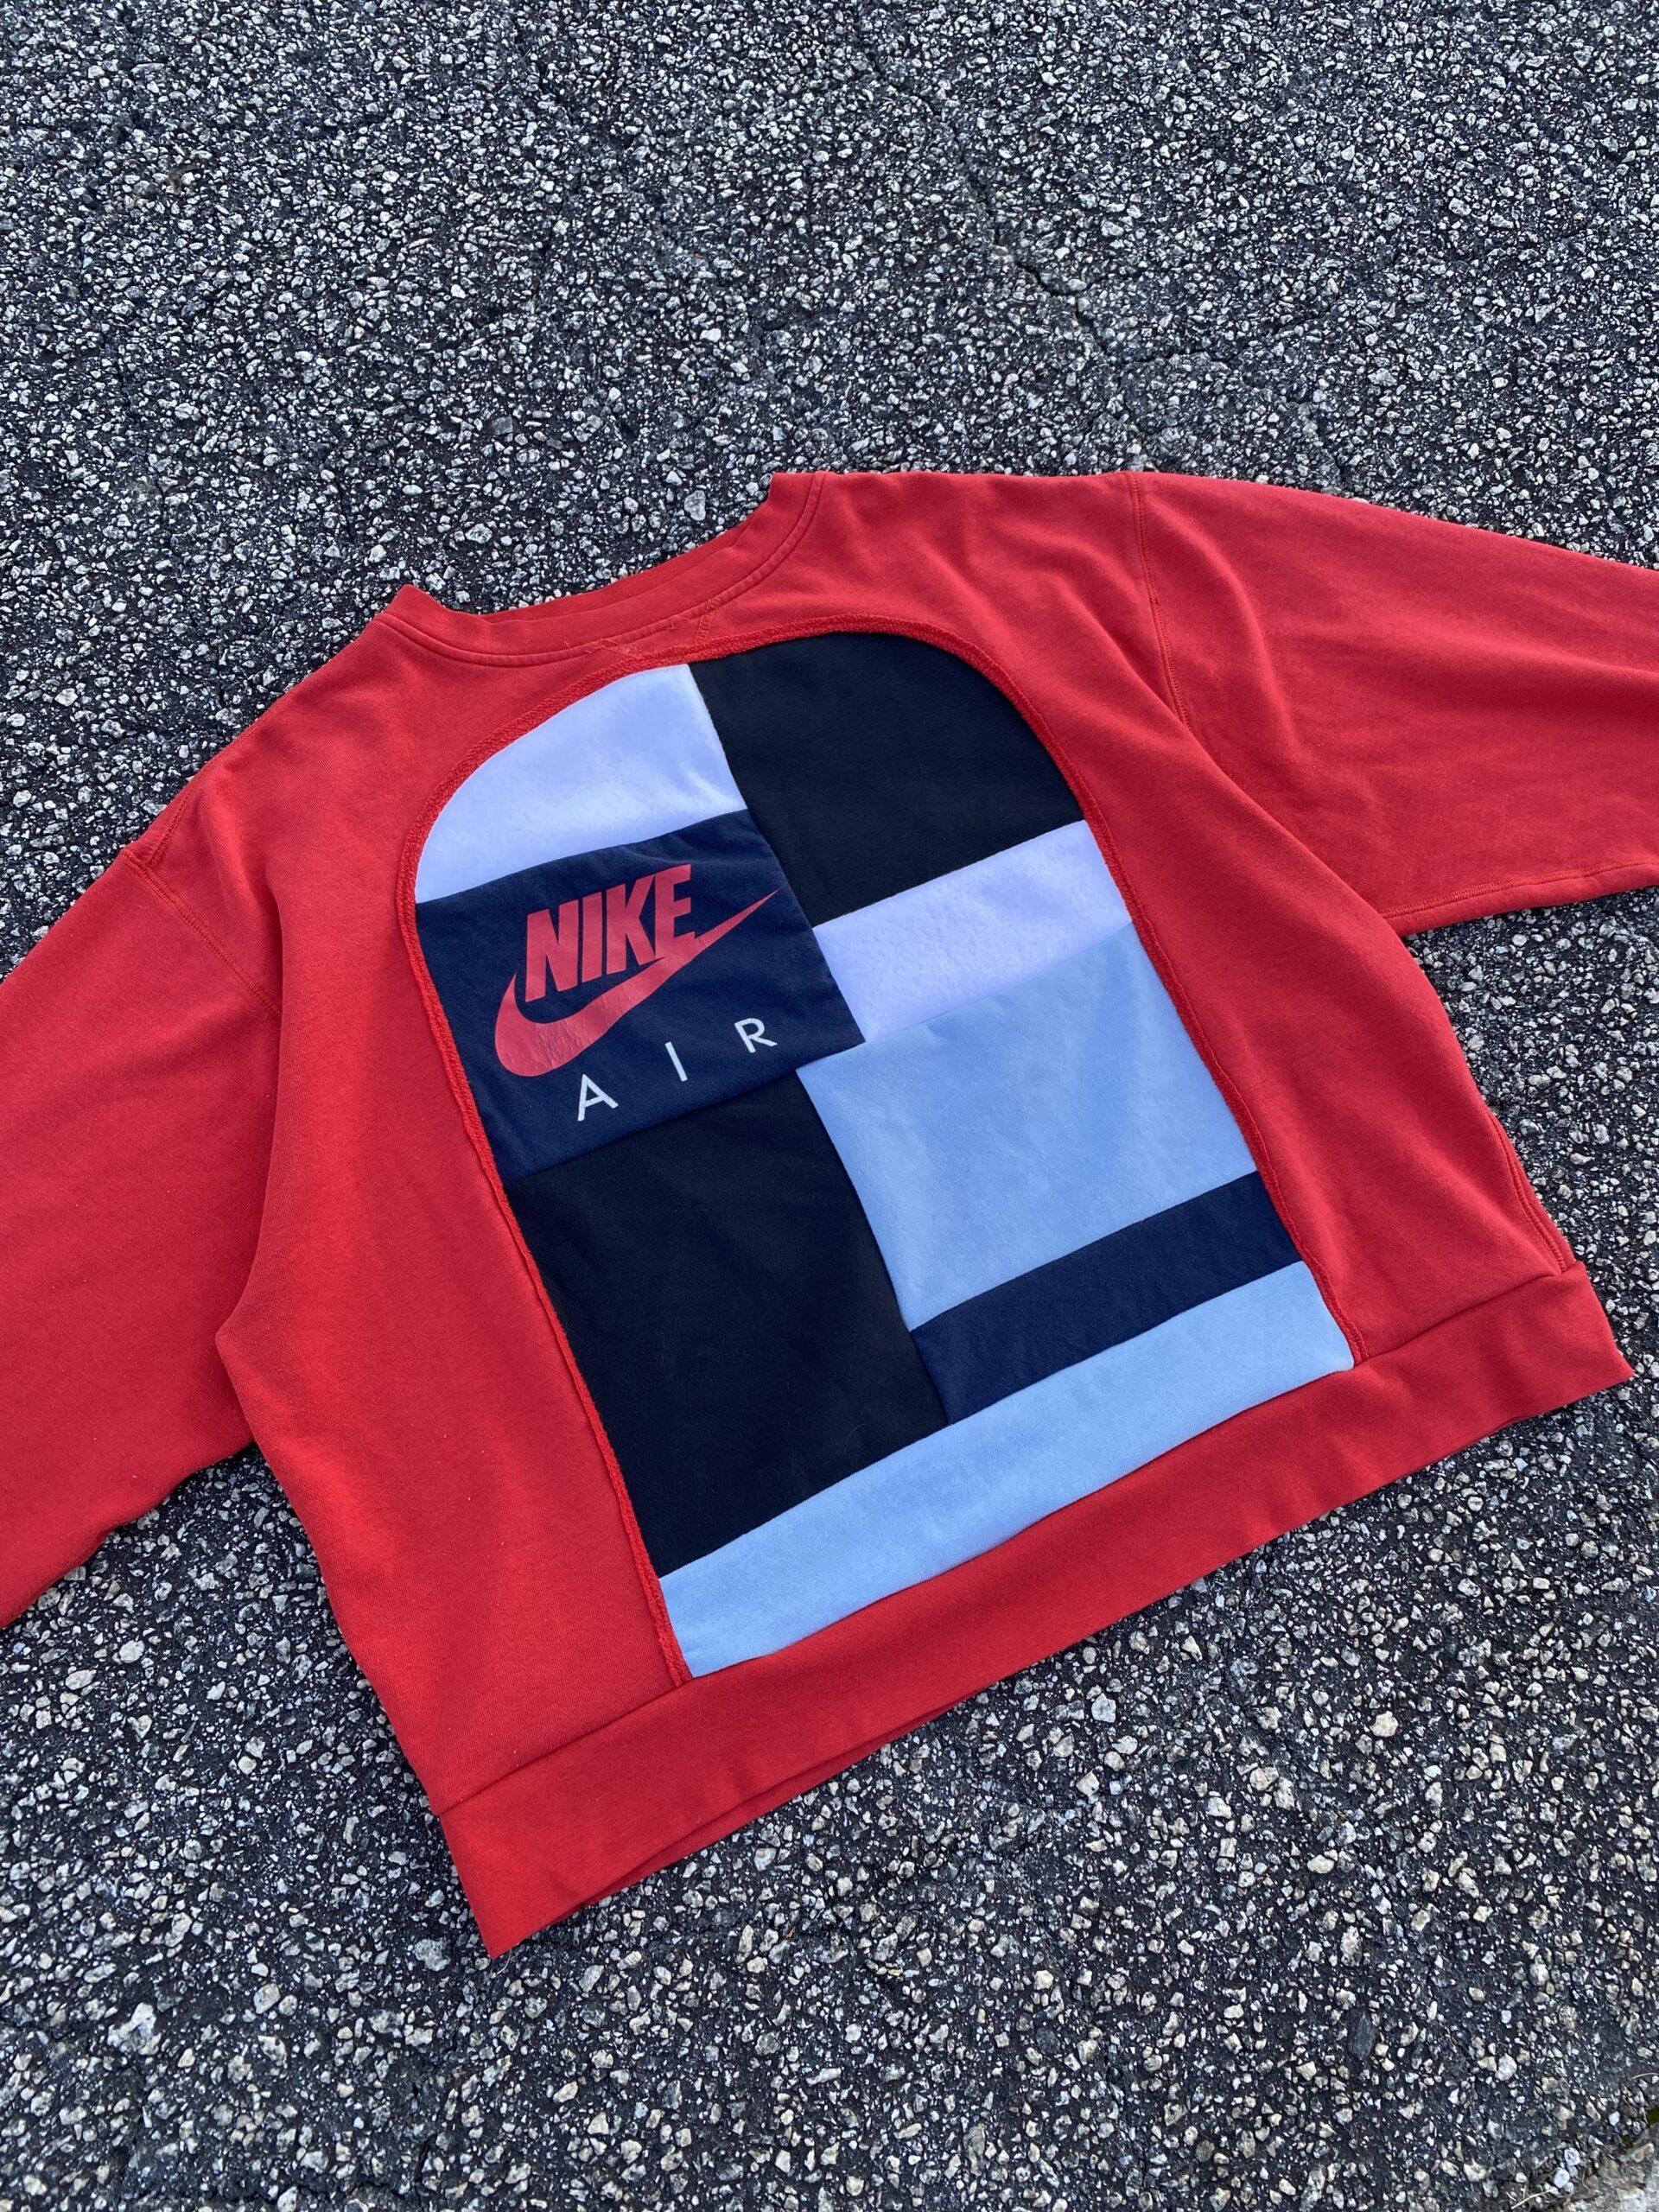 Red nike air cropped sweatshirt.